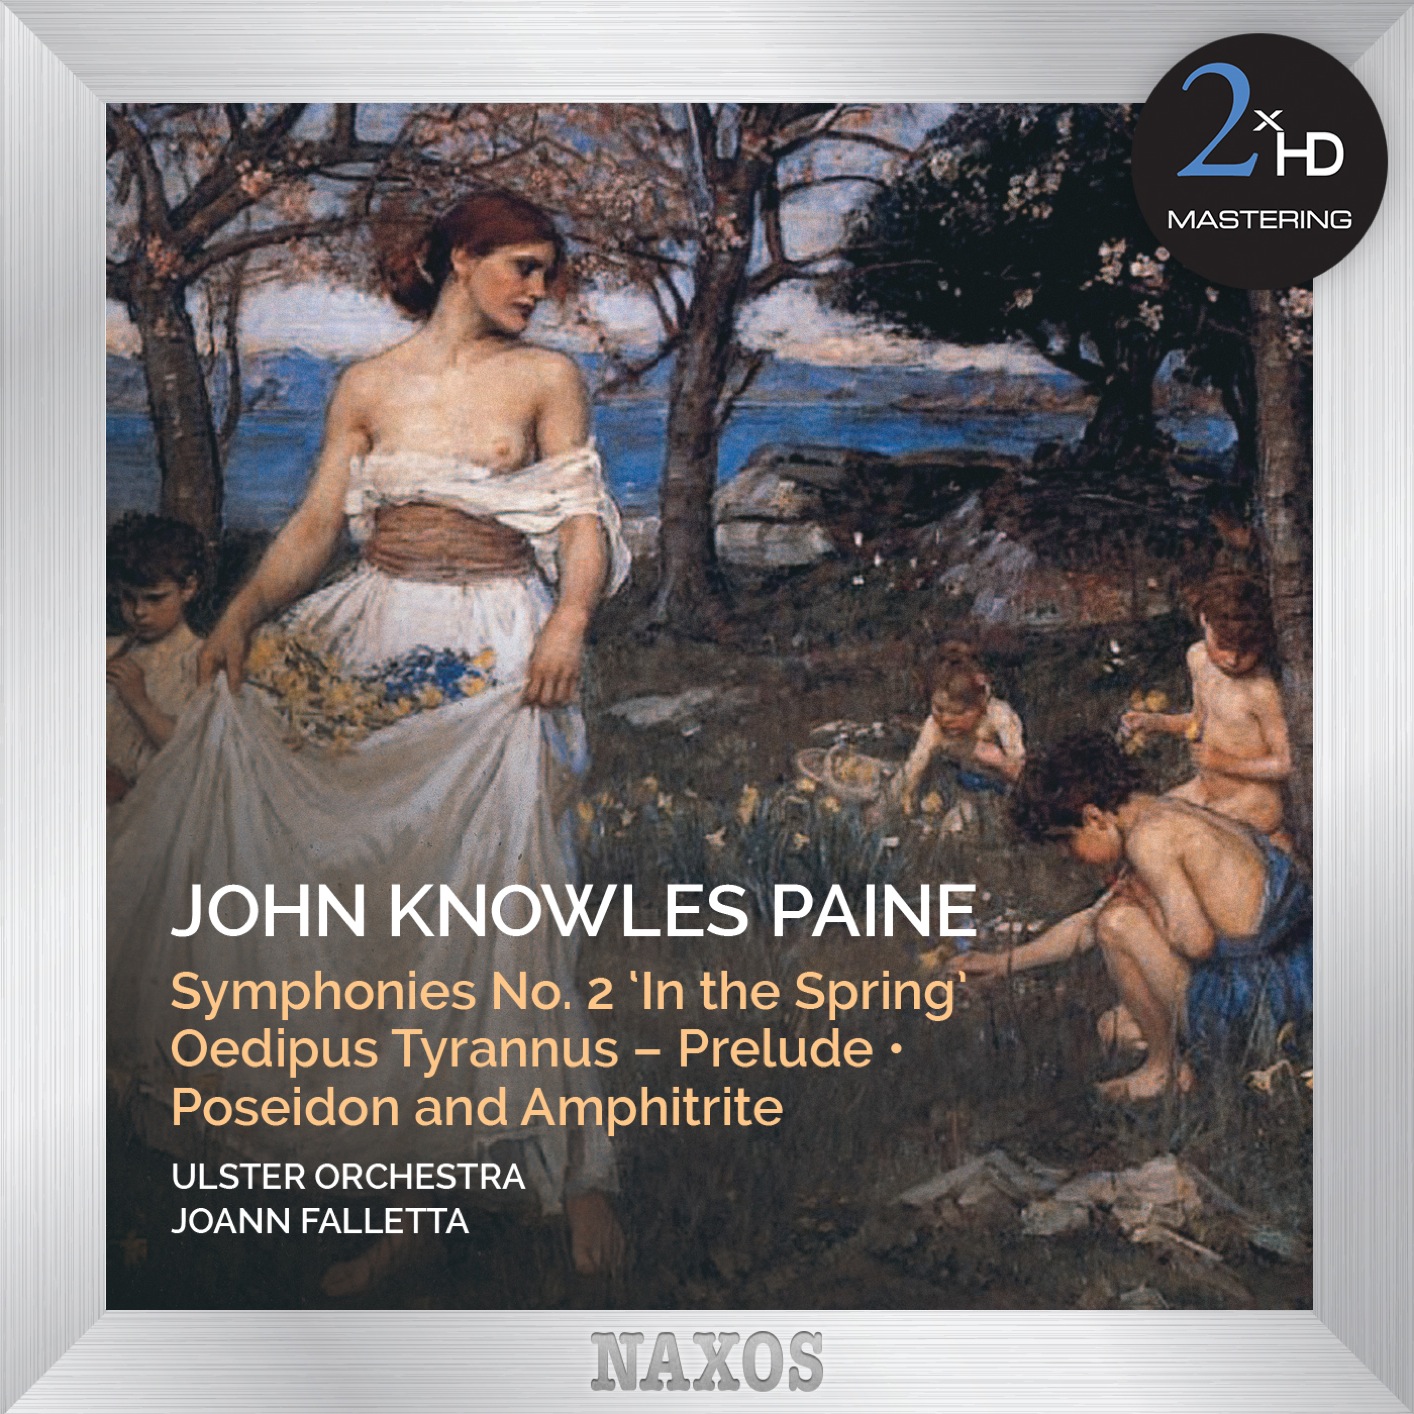 Ulster Orchestra & JoAnn Falletta - Paine: Symphony No. 2 - Oedipus Tyrannus: Prelude (2015) [FLAC 24bit/192kHz]